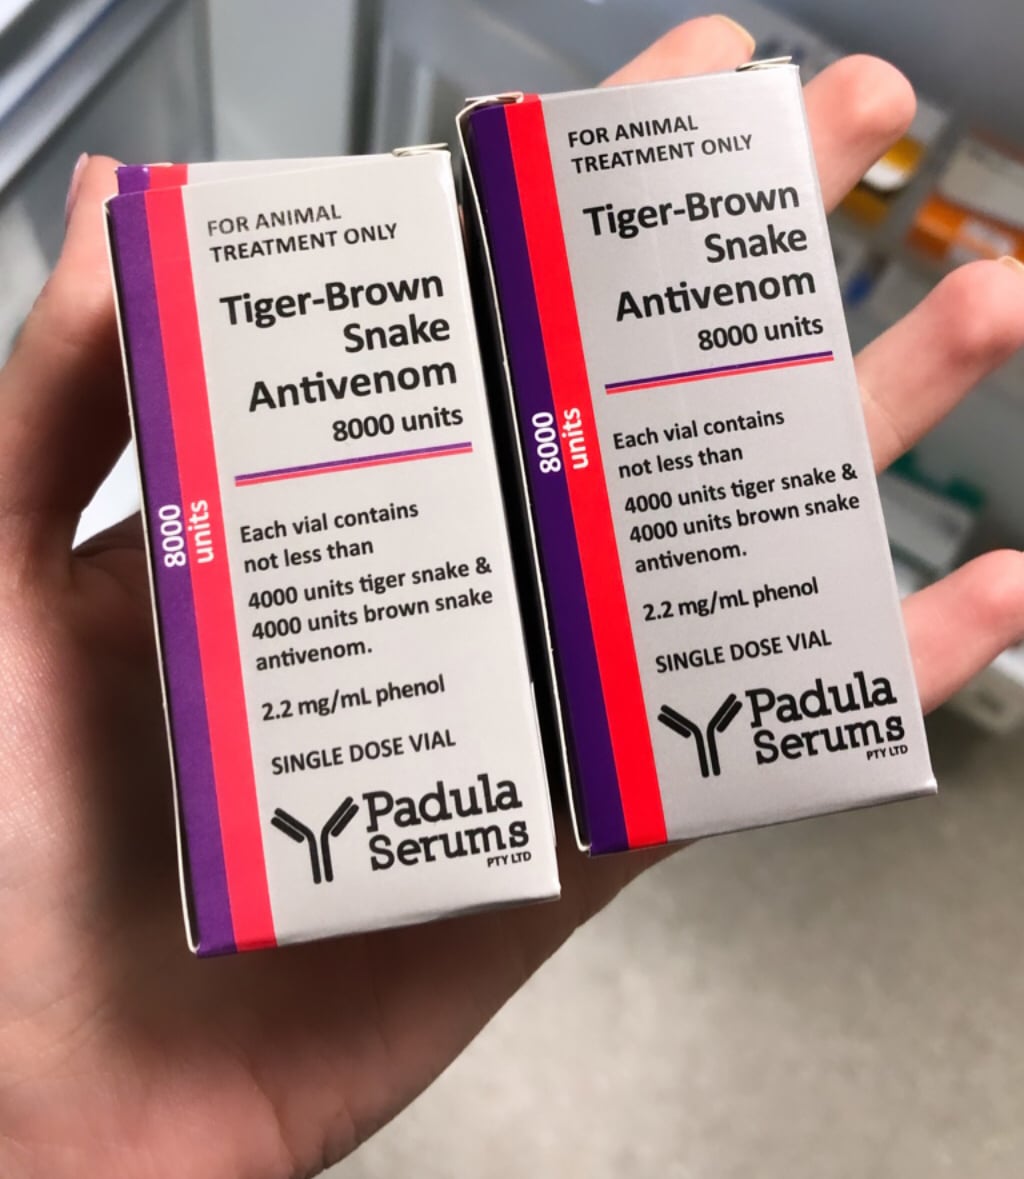 Padula Serums tiger-brown snake antivenom. packets